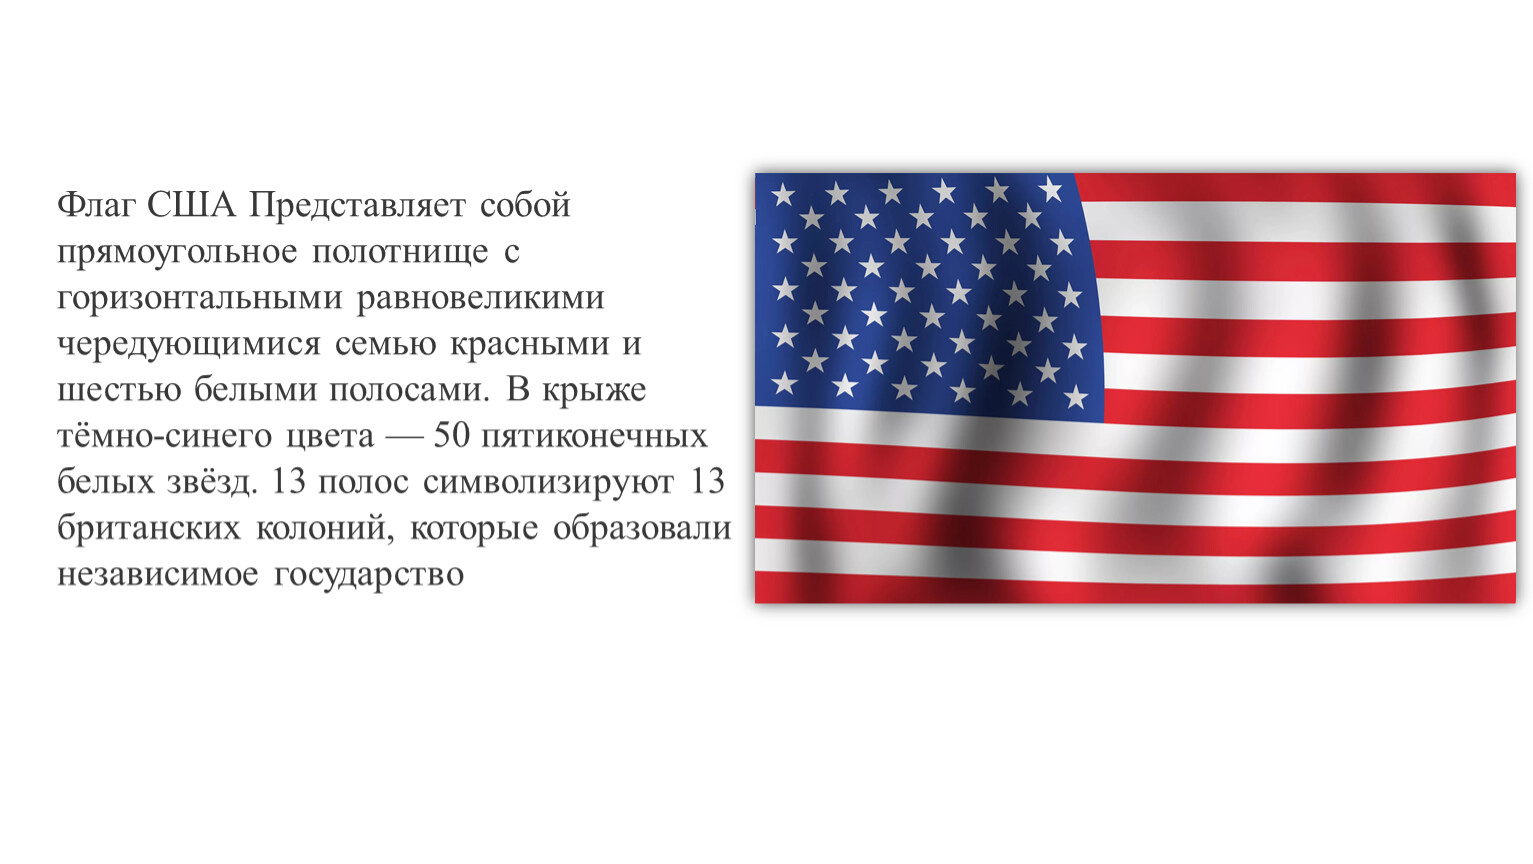 Сколько звезд на флаге третьей по размеру. Звезды на флаге США. Флаг США для презентации. Звезды американский флаг. Звезды и полосы на флаге США.